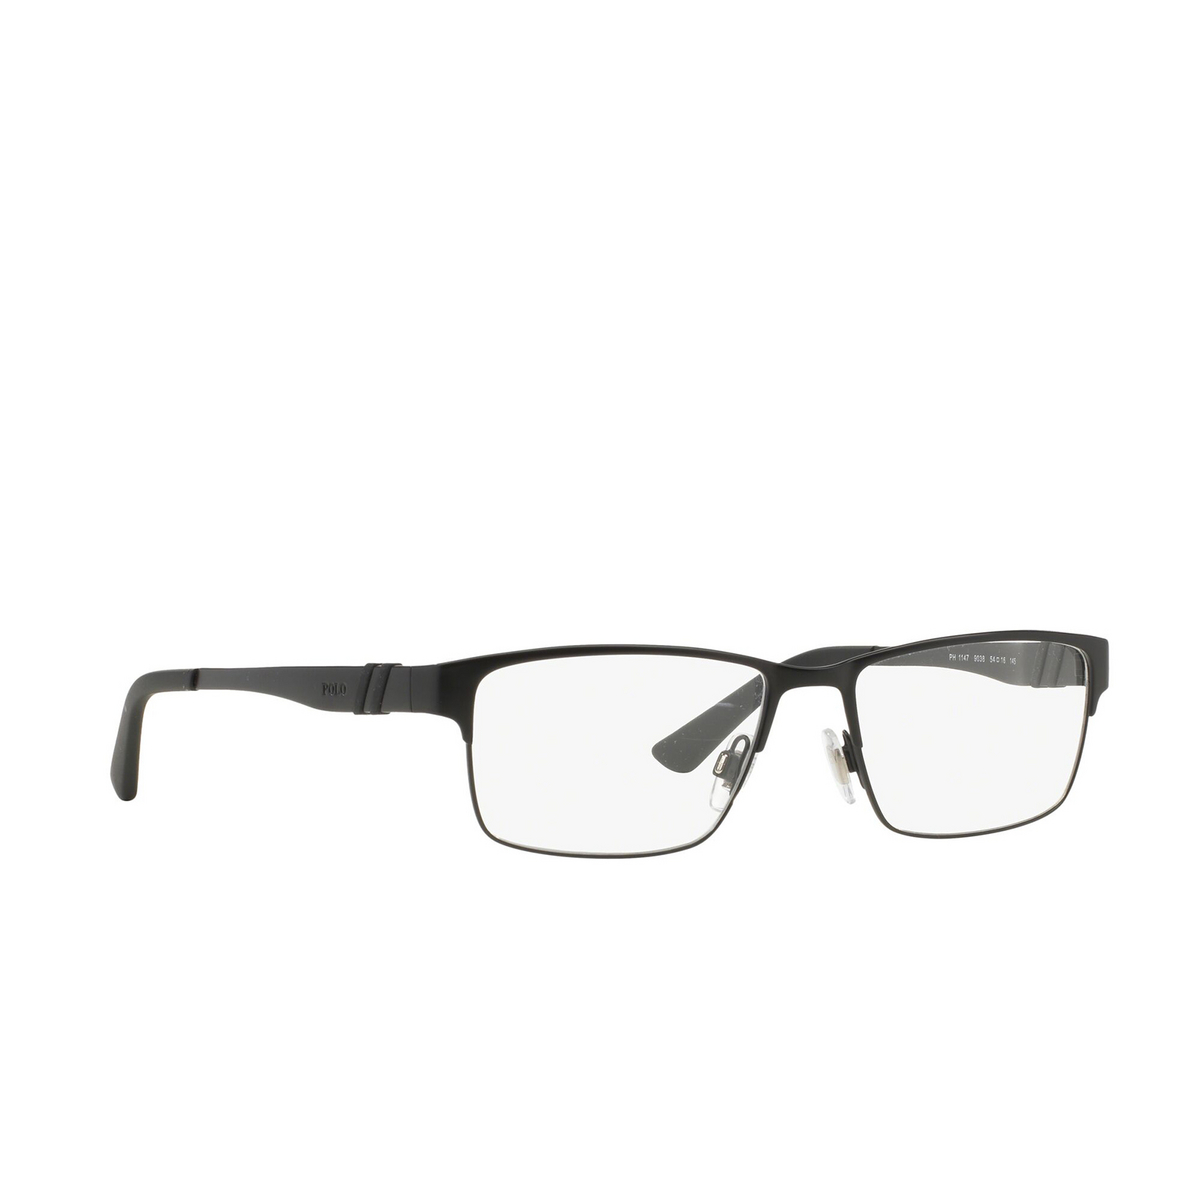 Polo Ralph Lauren® Rectangle Eyeglasses: PH1147 color Matte Black 9038 - three-quarters view.